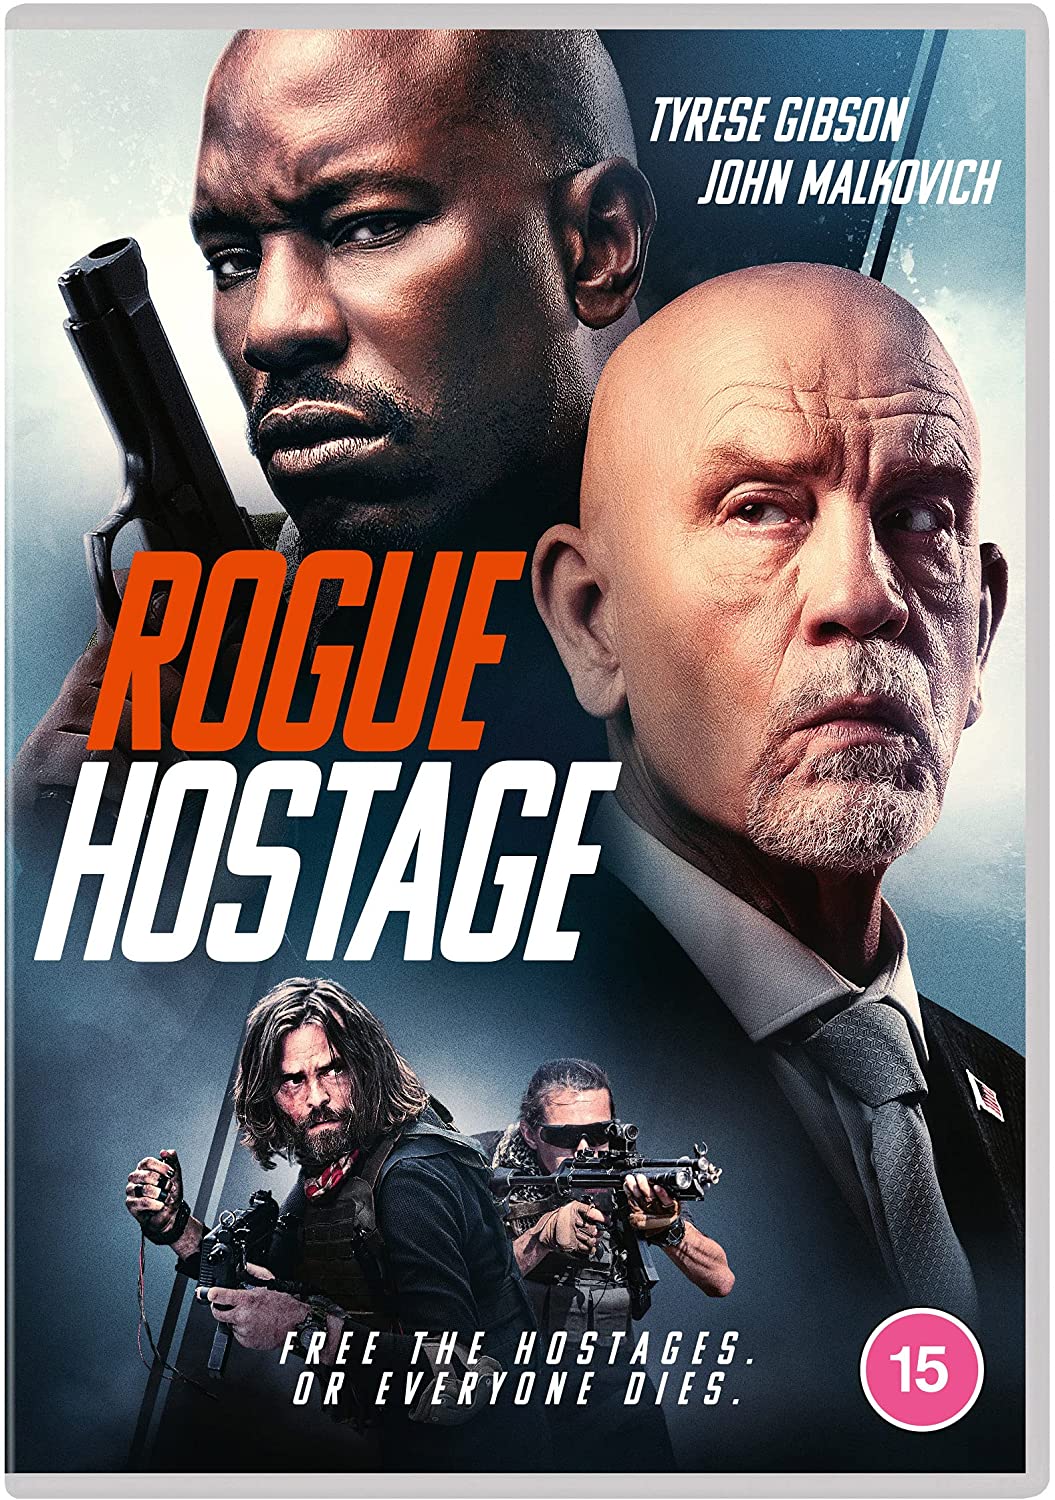 Rogue Hostage - Action/Thriller [DVD]